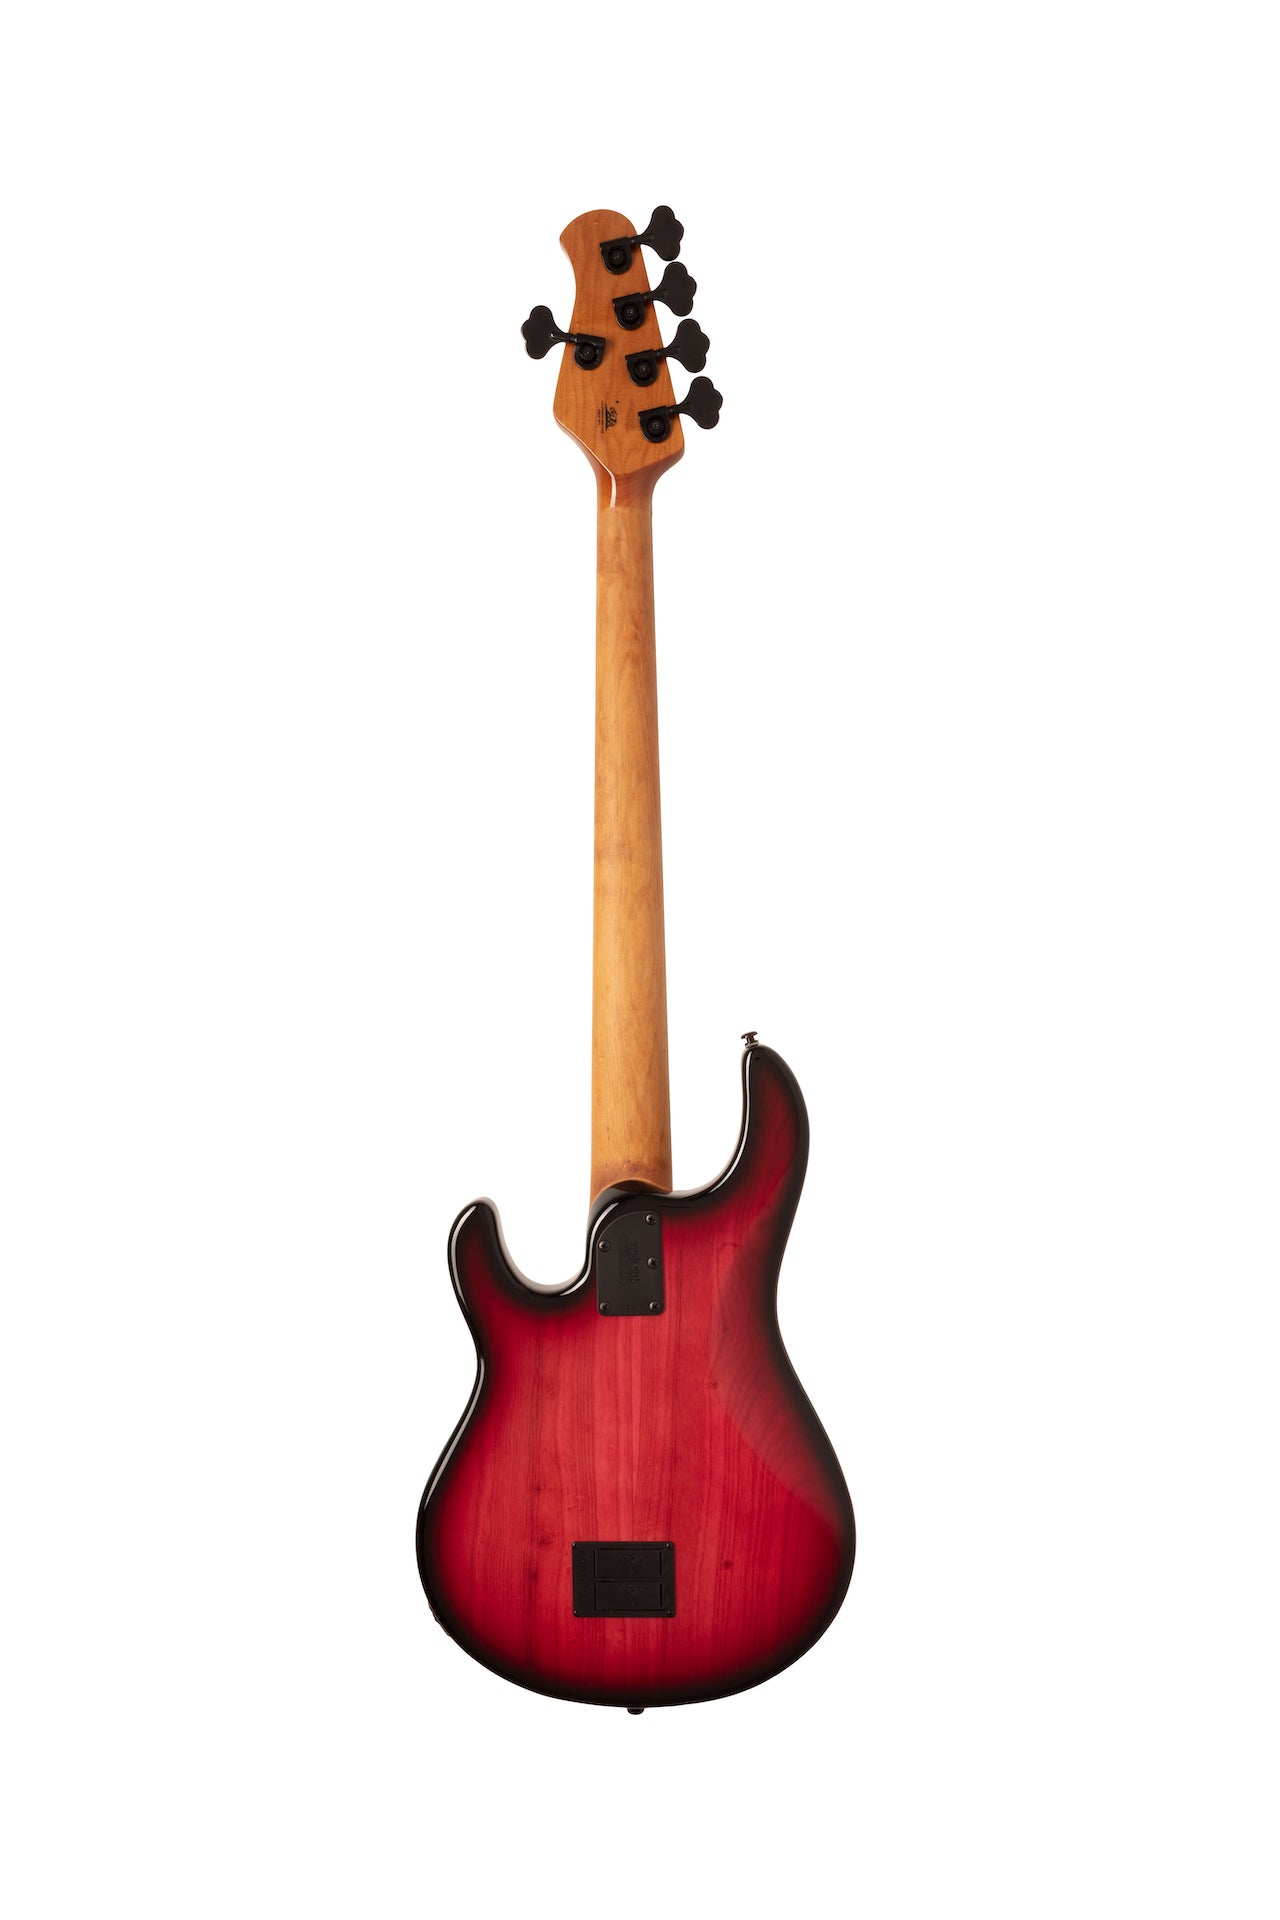 Ernie Ball Music Man StingRay Special 5 HH Bass Guitar - Raspberry Burst with Ebony Fingerboard F97563 - HIENDGUITAR   Musicman bass